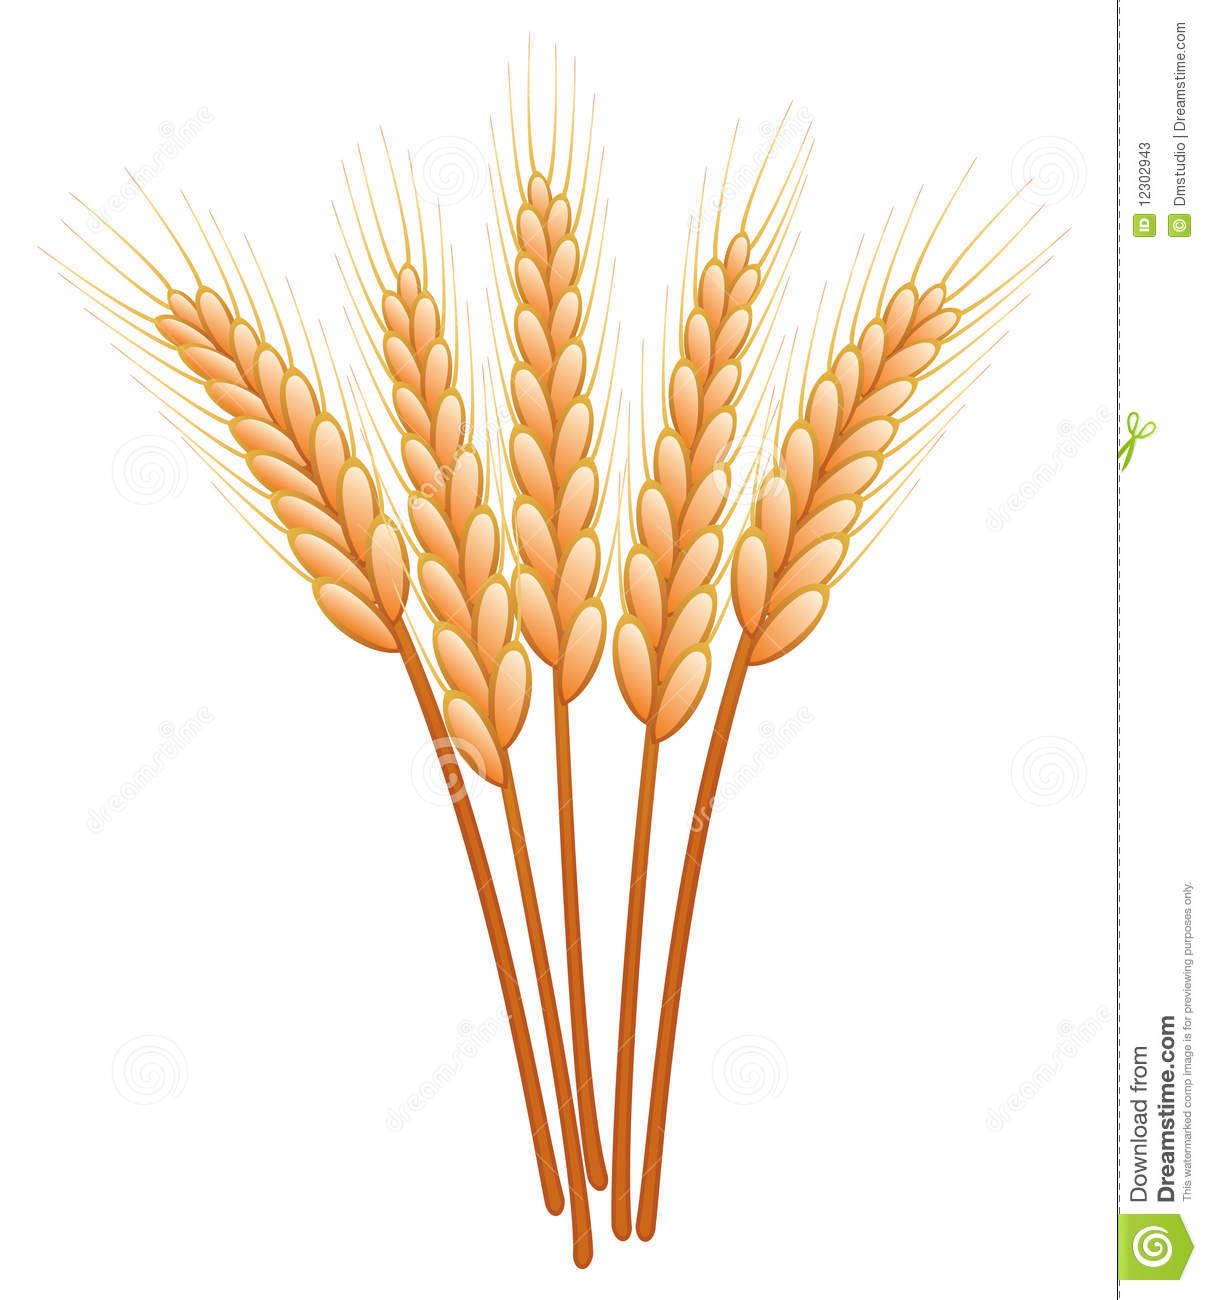 Grains clipart wheat plant. Crops portal 